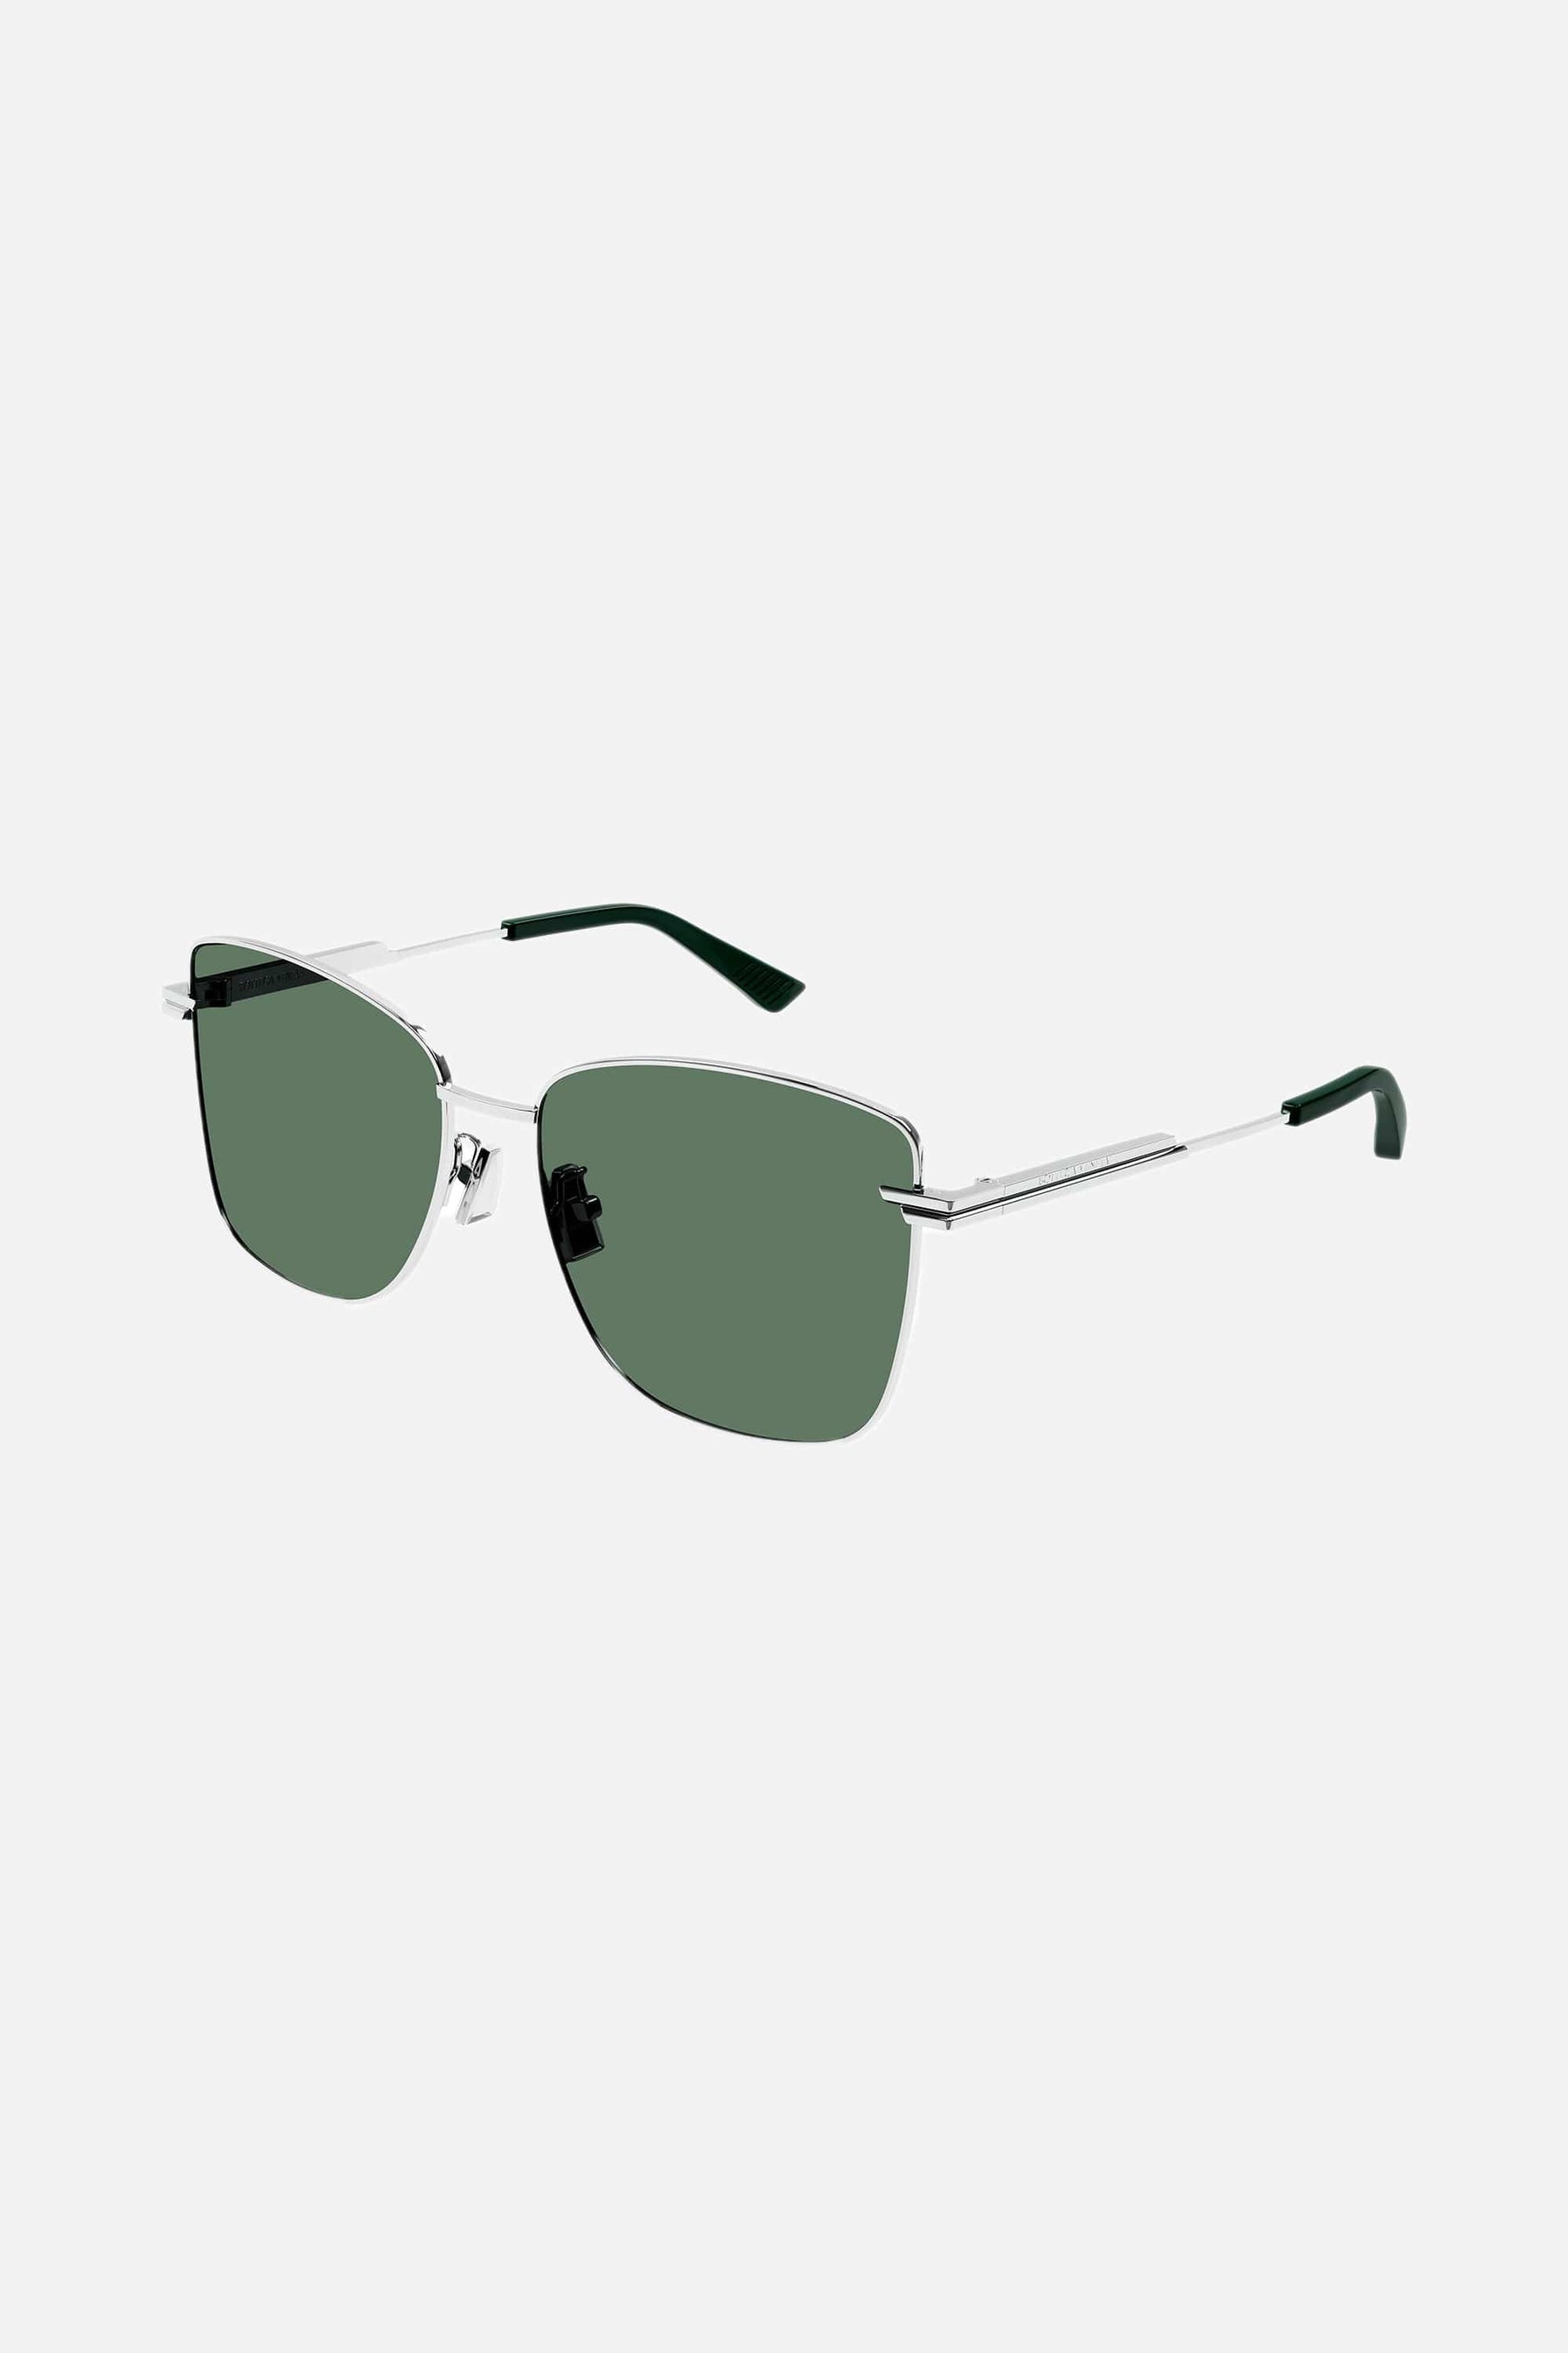 Bottega Veneta squared cat eye green silver sunglasses - Eyewear Club